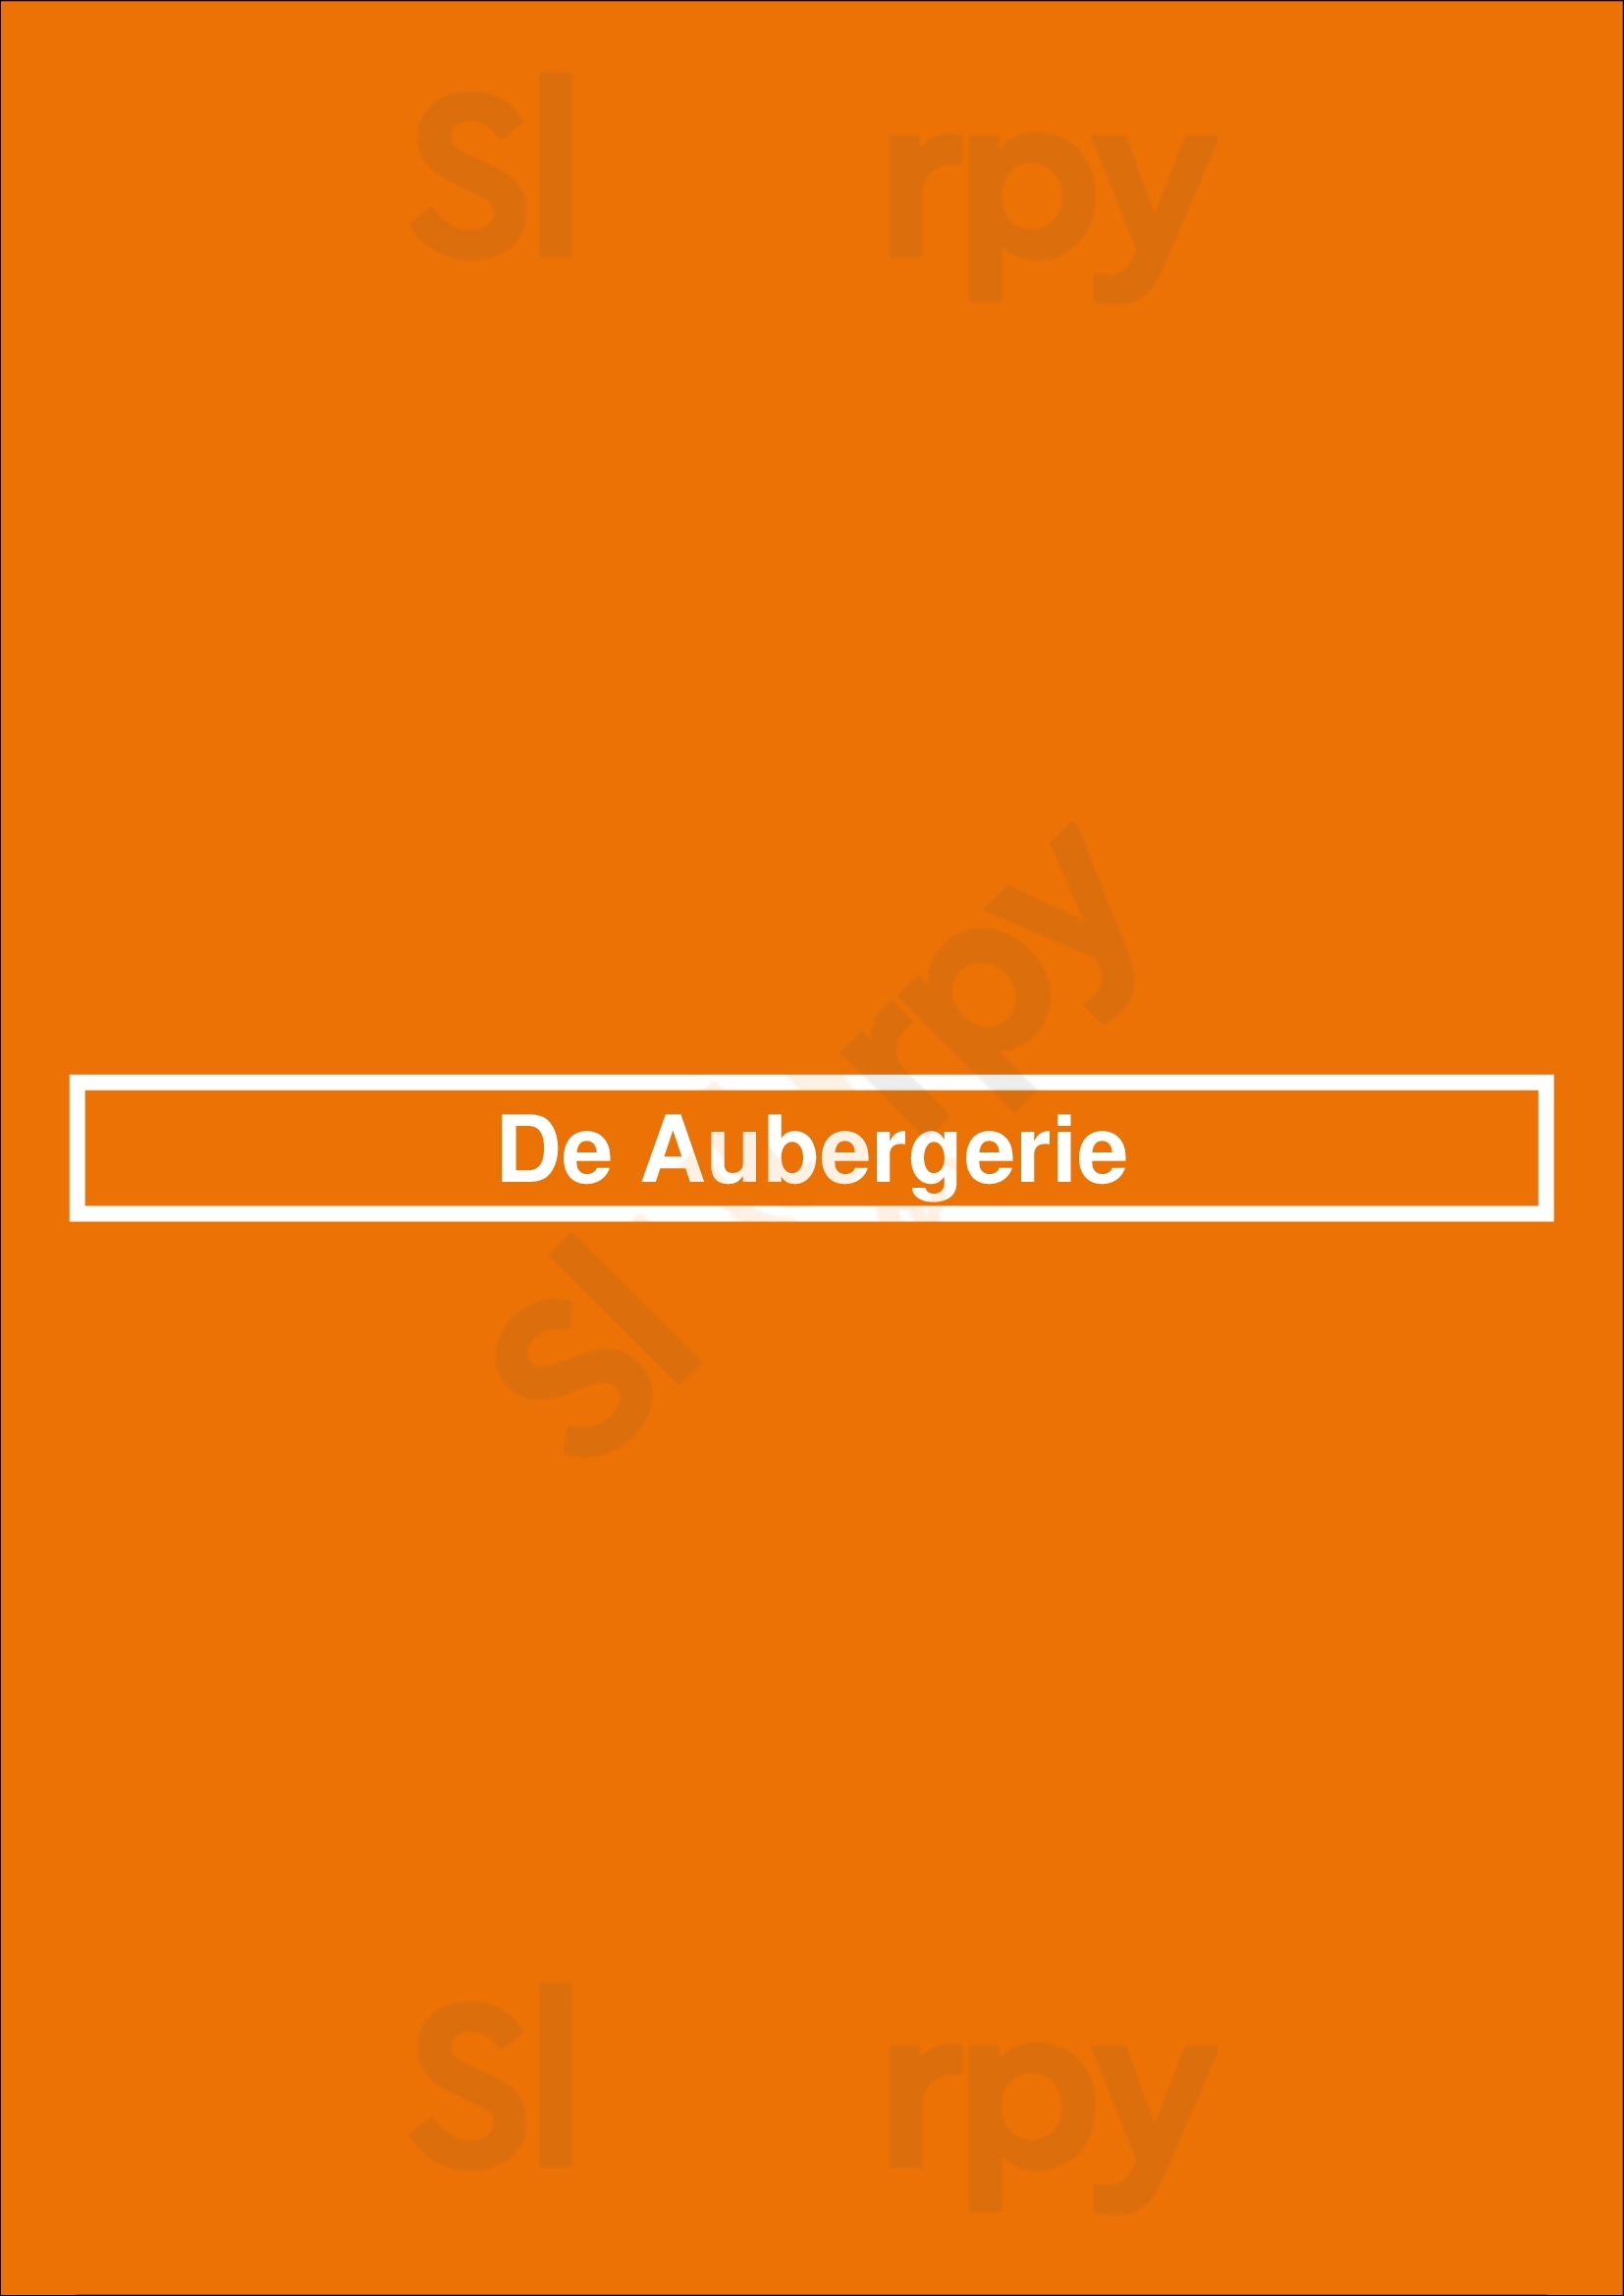 De Aubergerie Amersfoort Menu - 1